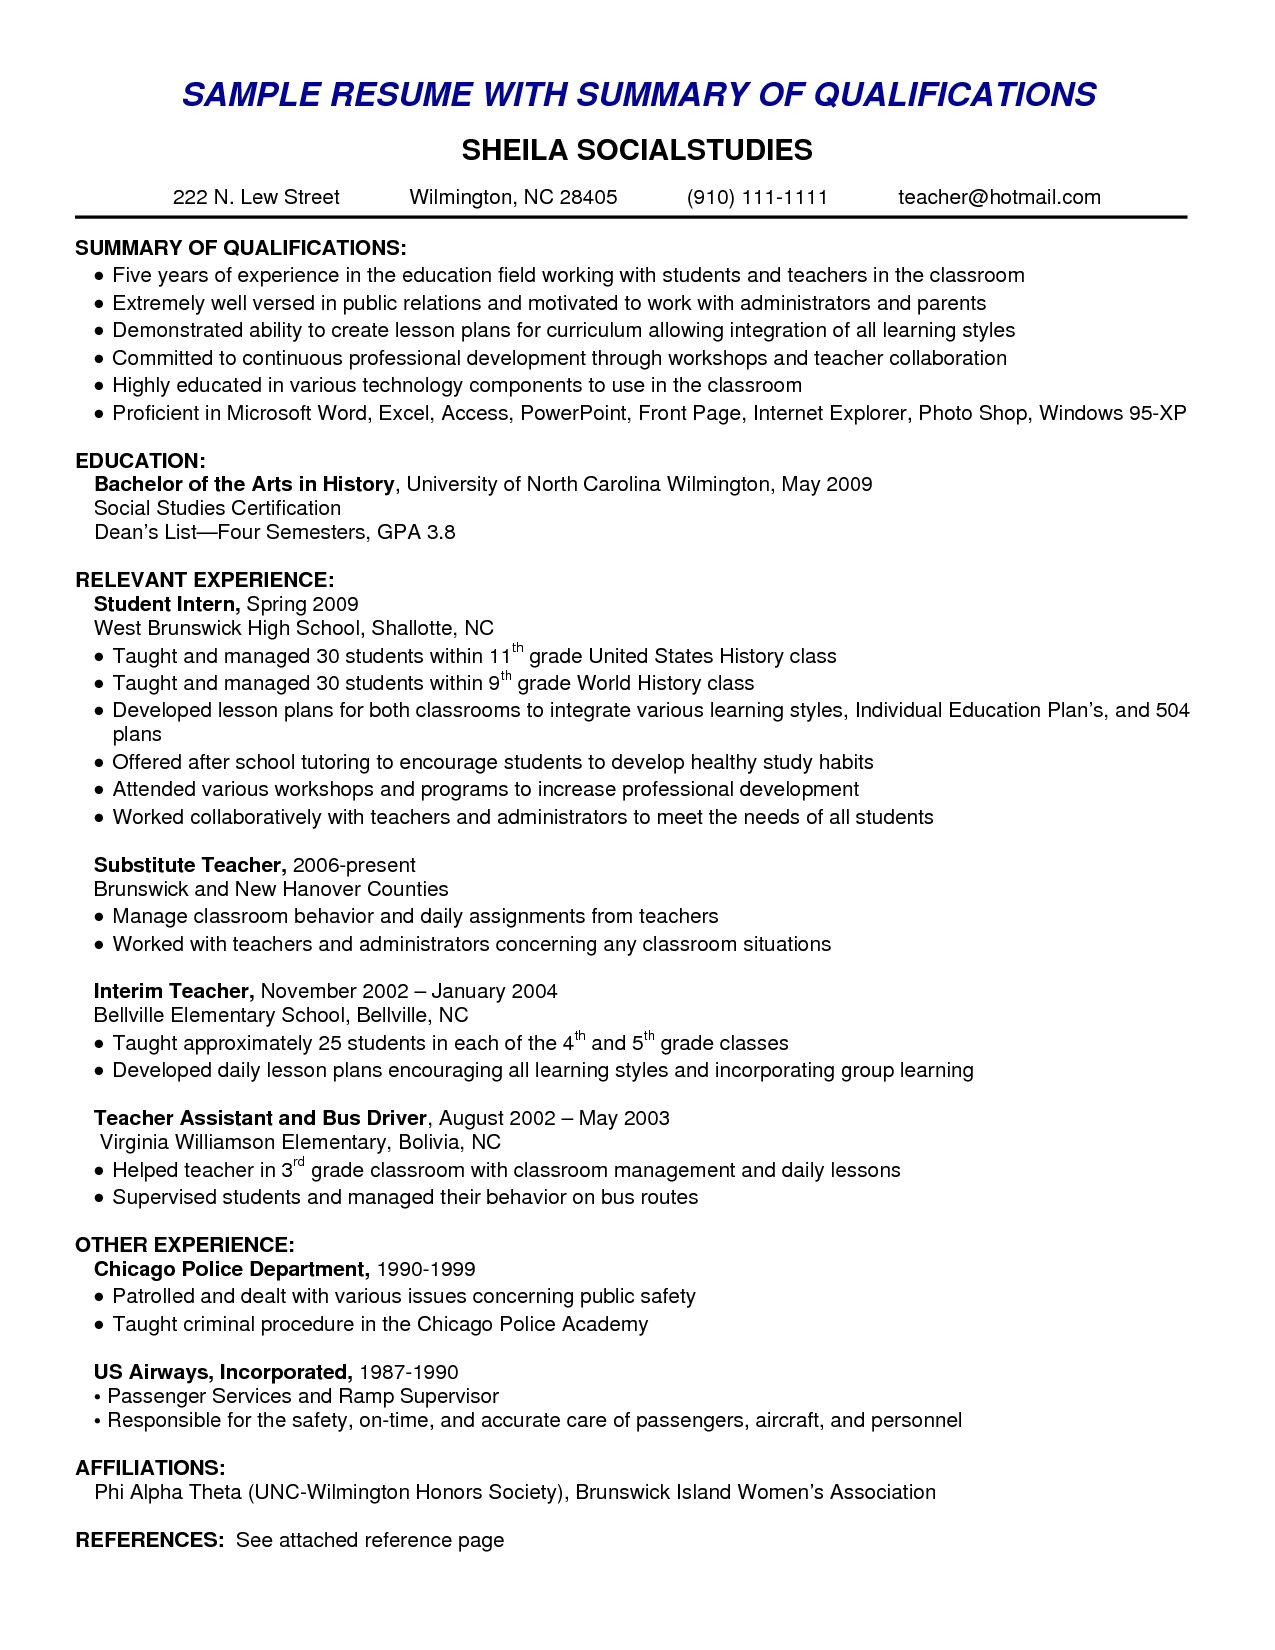 Sample Professional Resume Summary Of Qualifications Summary Of Qualifications Example